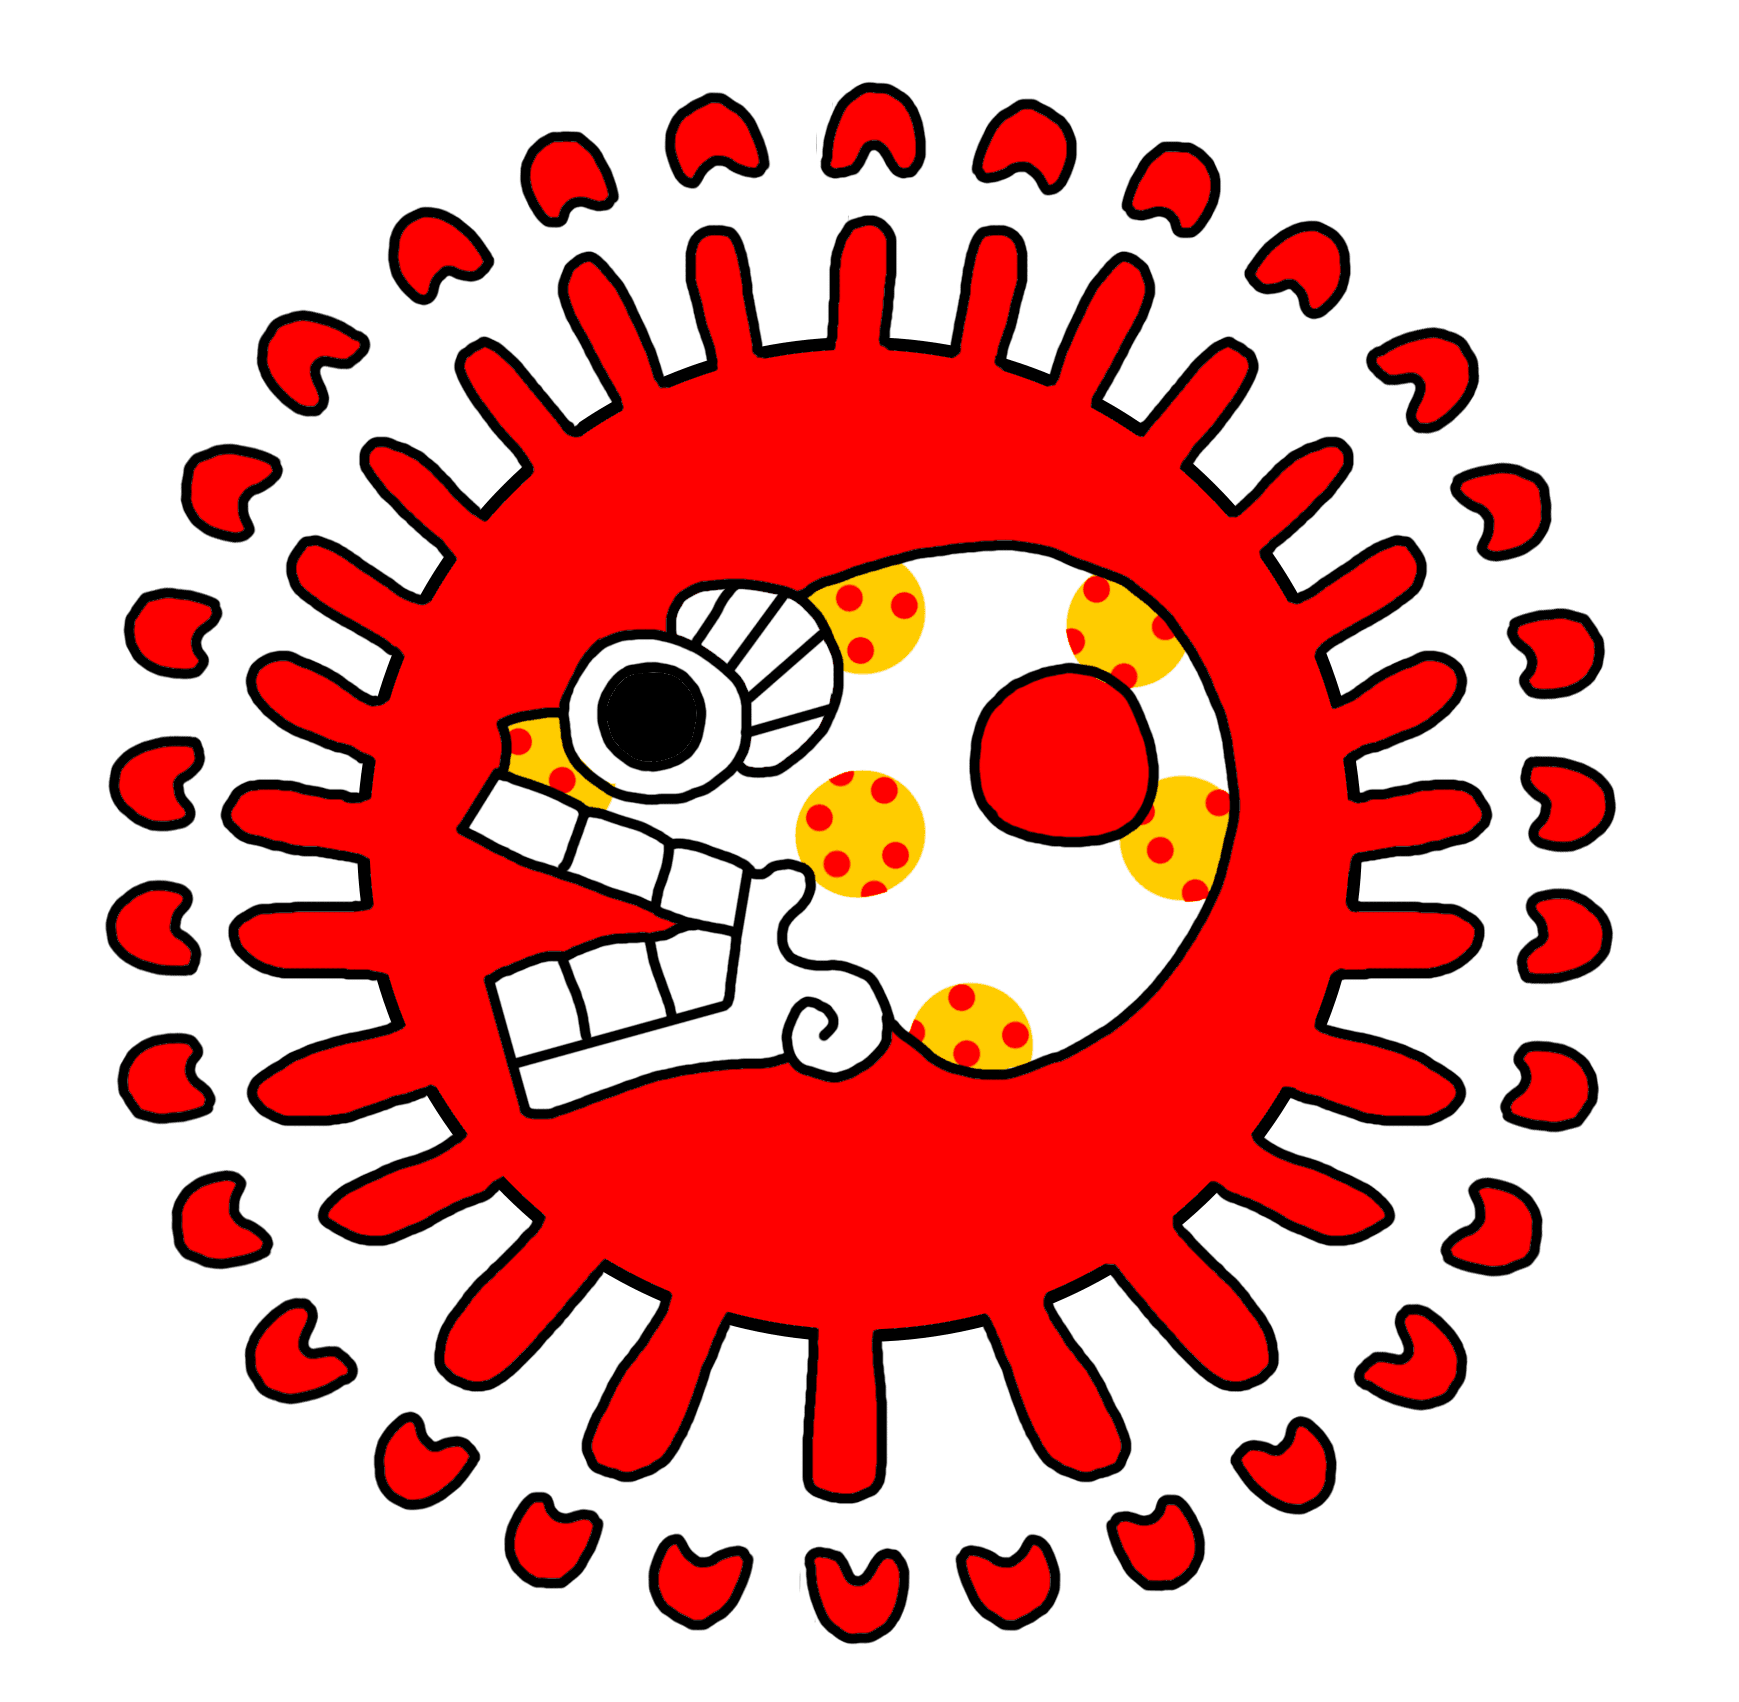 Quetzalcoatlia